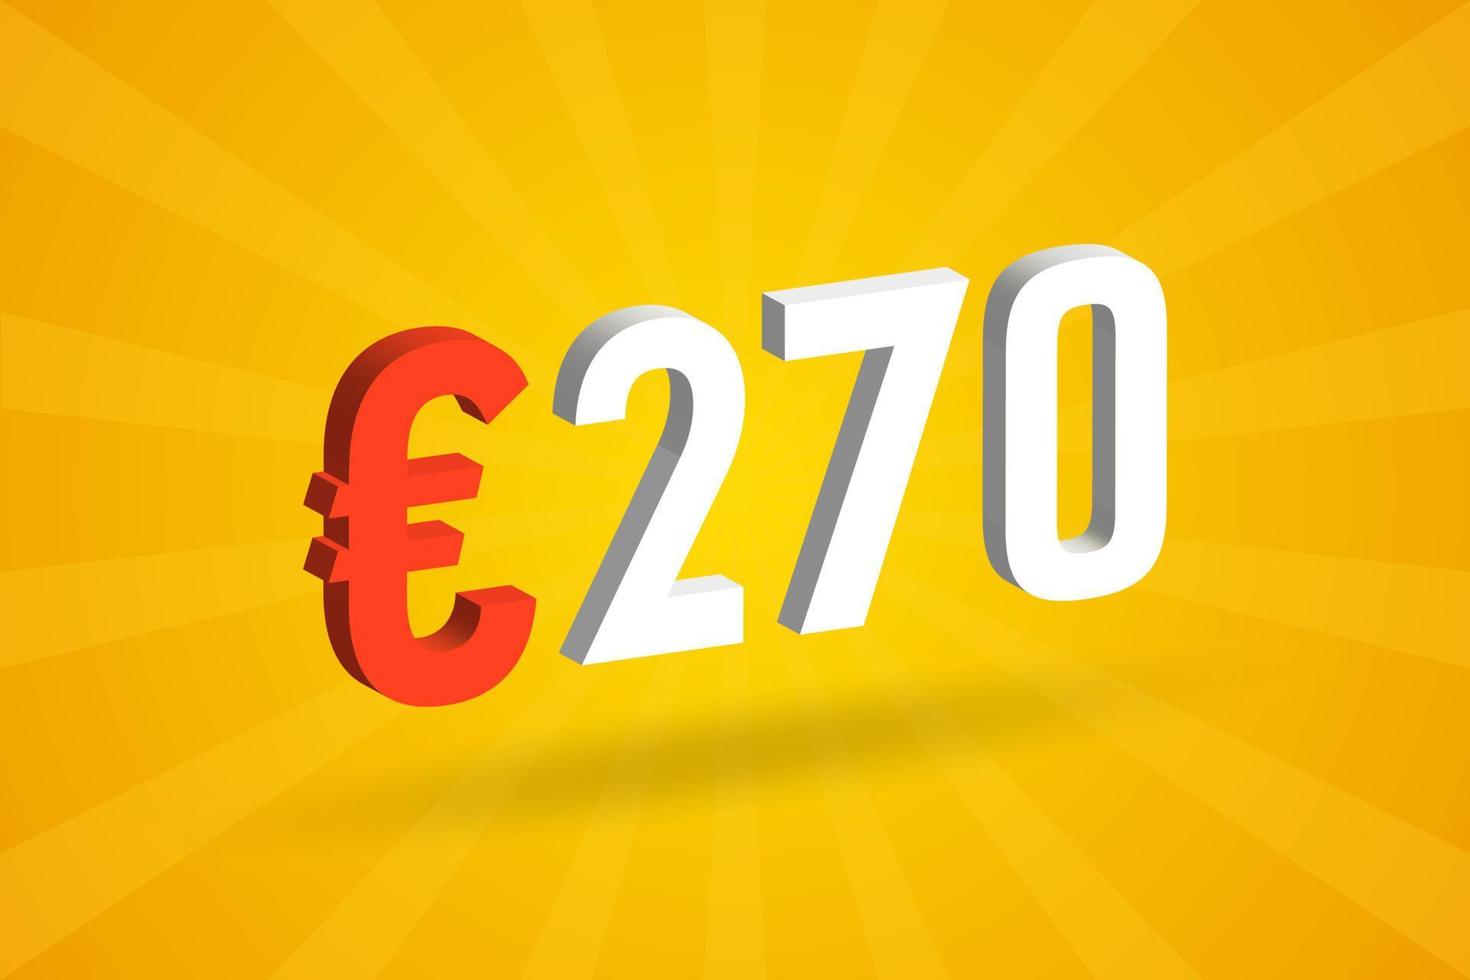 270 Euro Currency 3D vector text symbol. 3D 270 Euro European Union Money stock vector